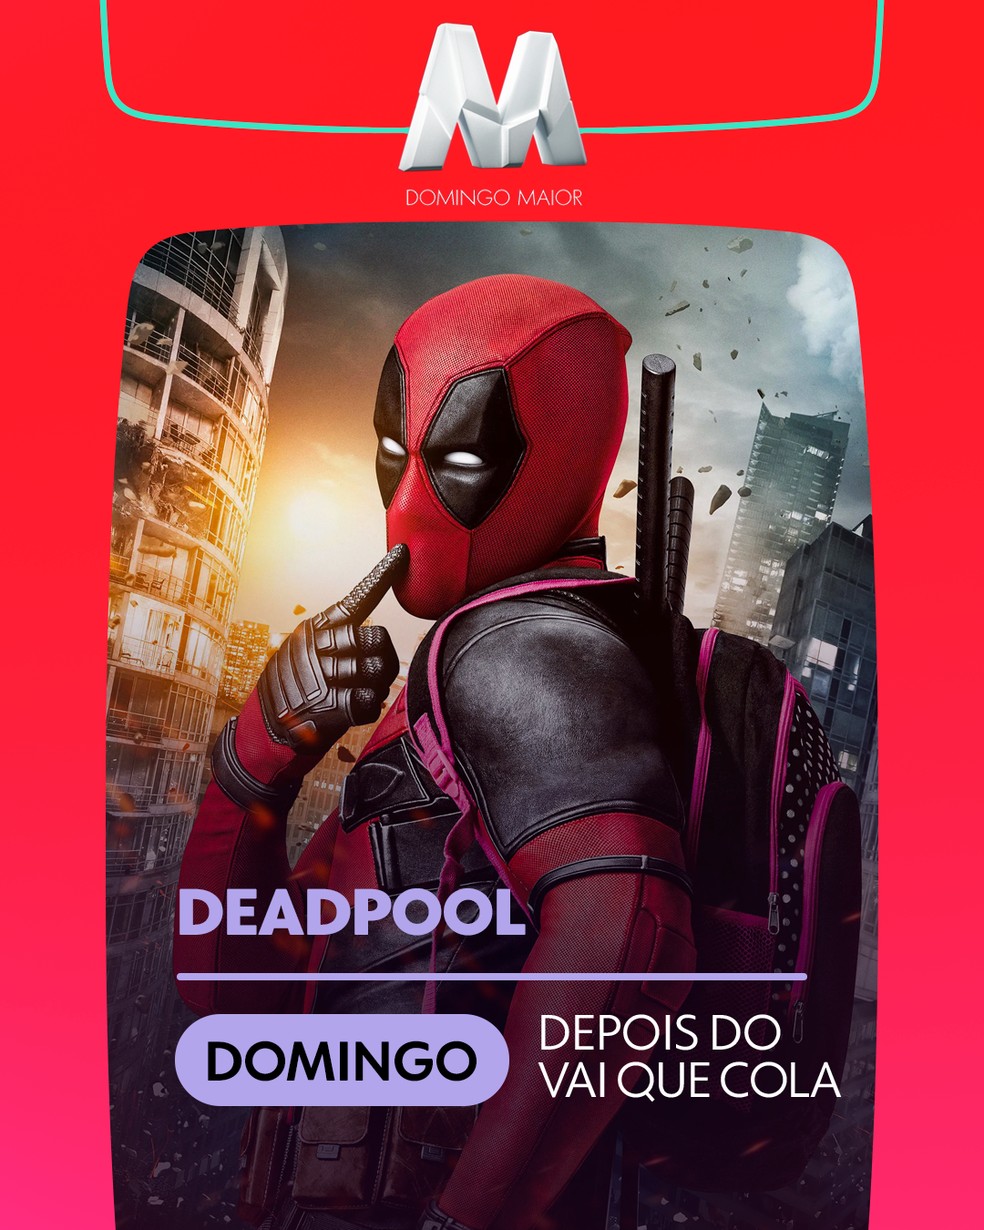 Deadpool 2: elenco, sinopse e onde assistir online - Olhar Digital